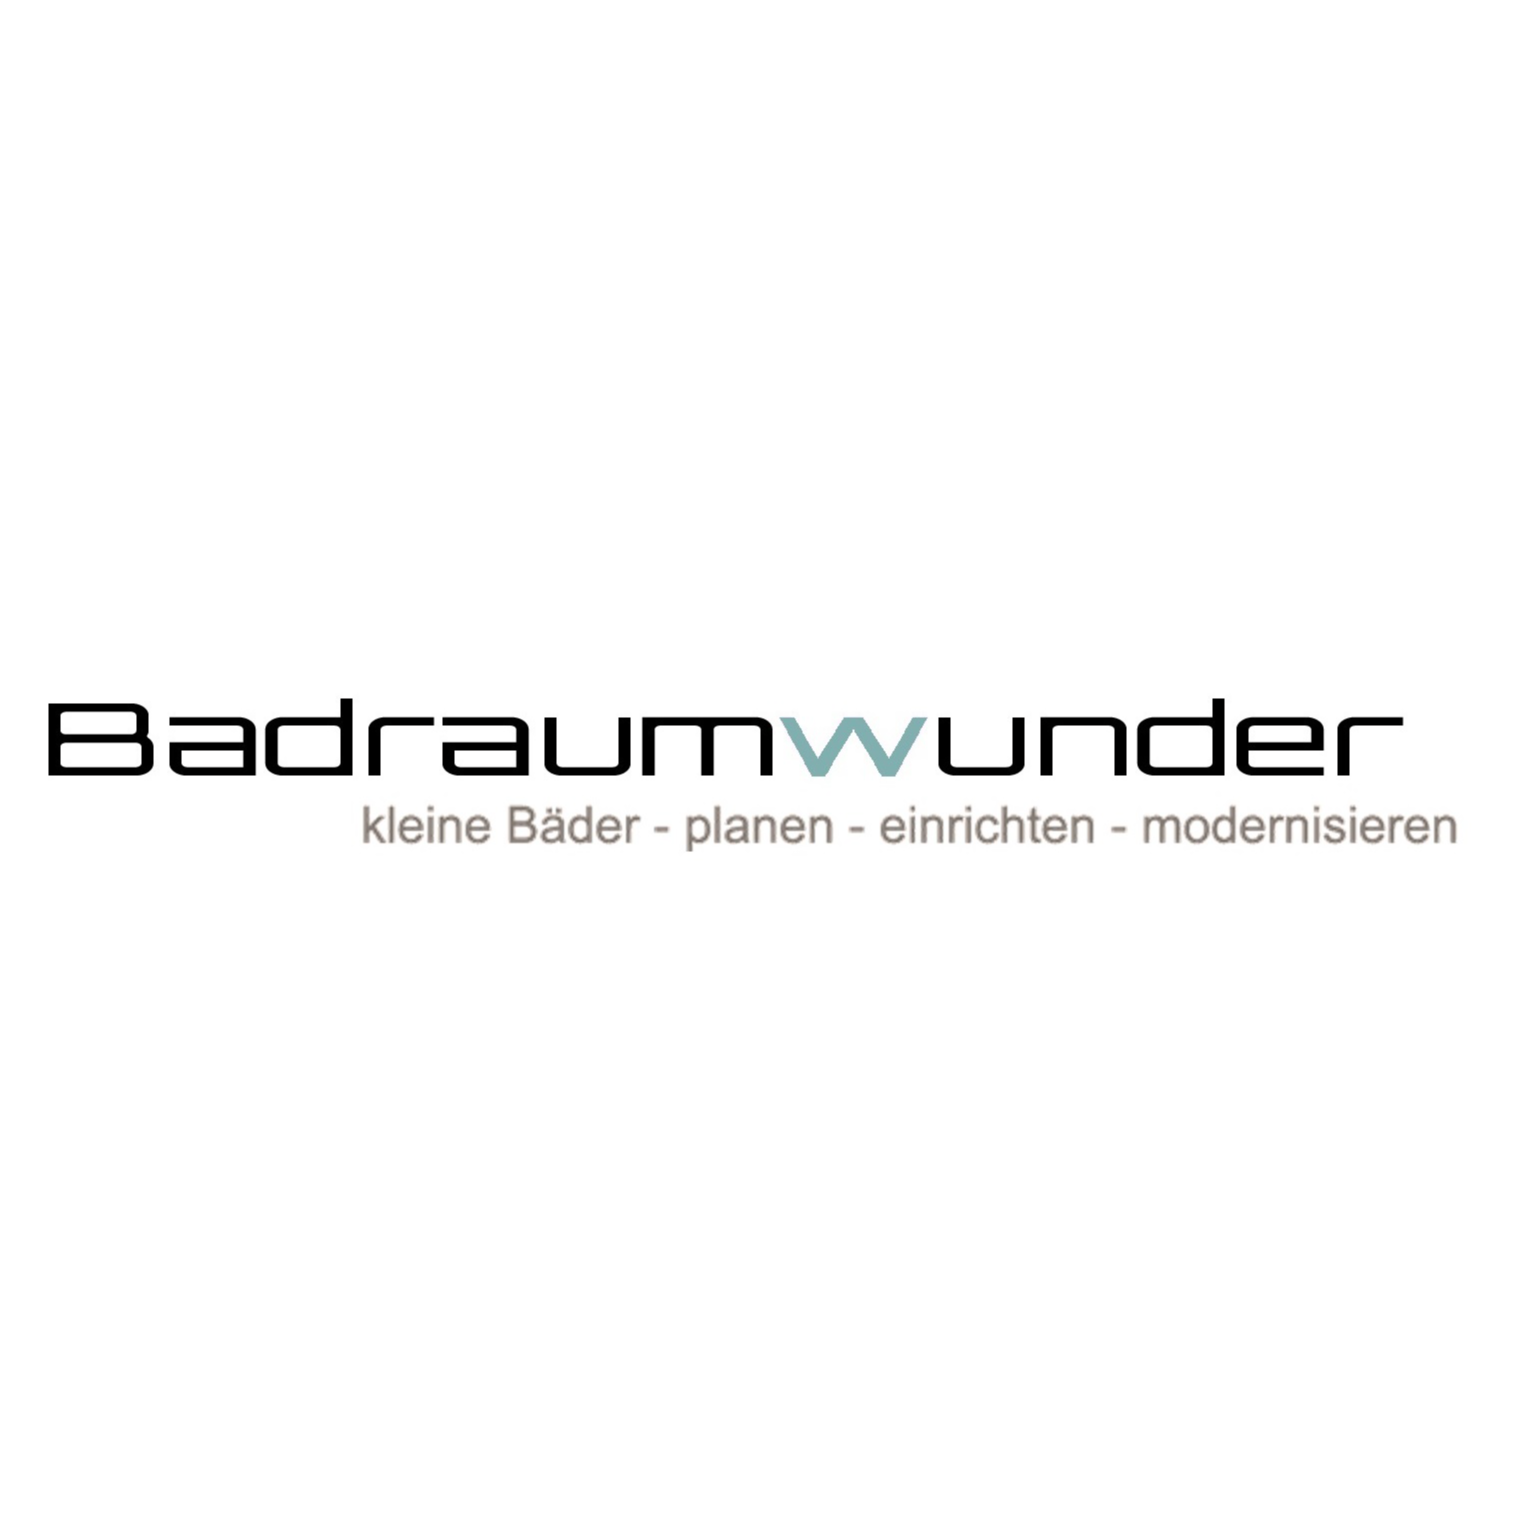 Badraumwunder Logo